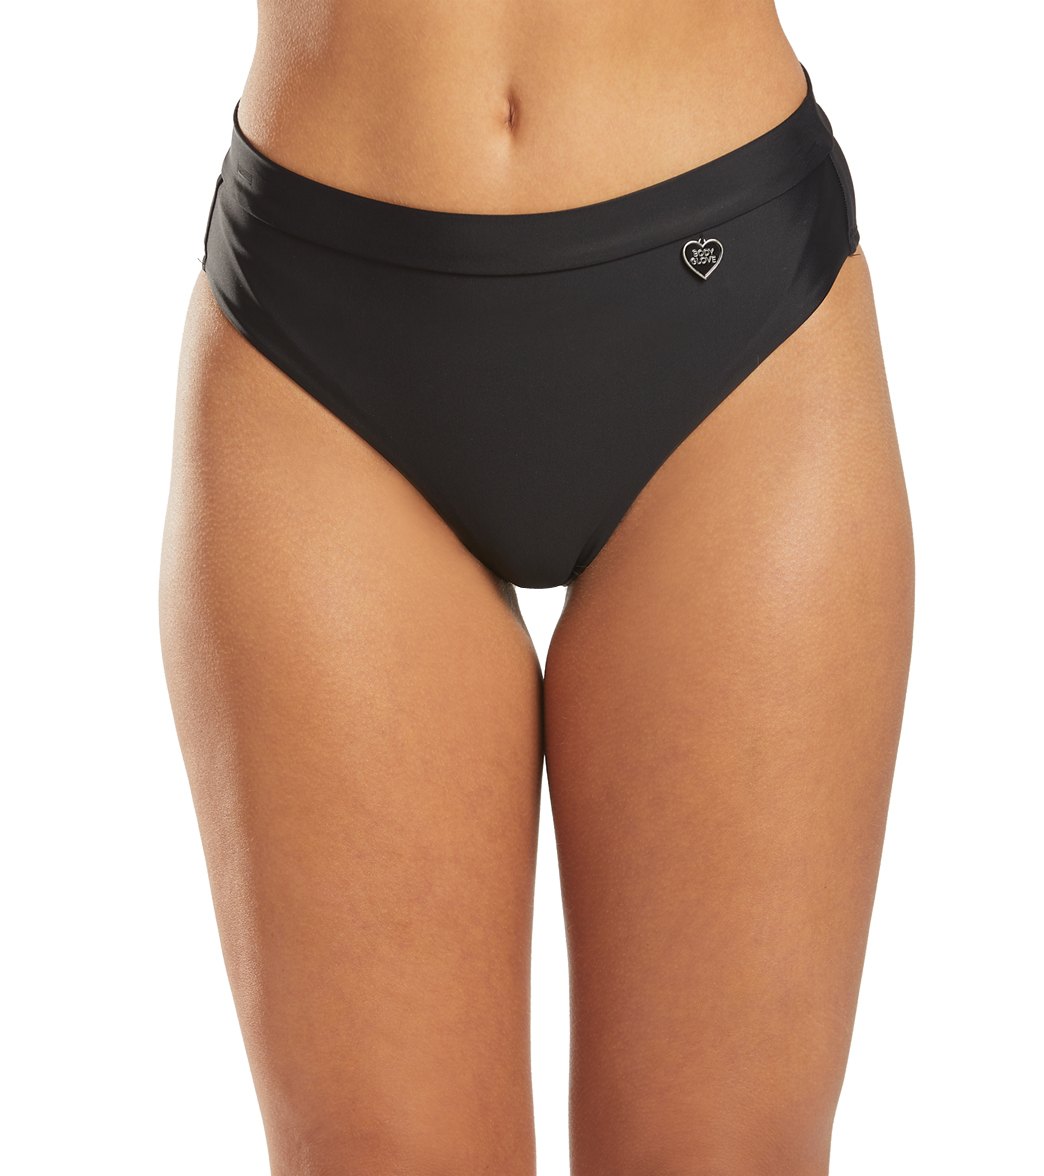 Body Glove Smoothies Marlee Bikini Bottom - Black X-Small - Swimoutlet.com